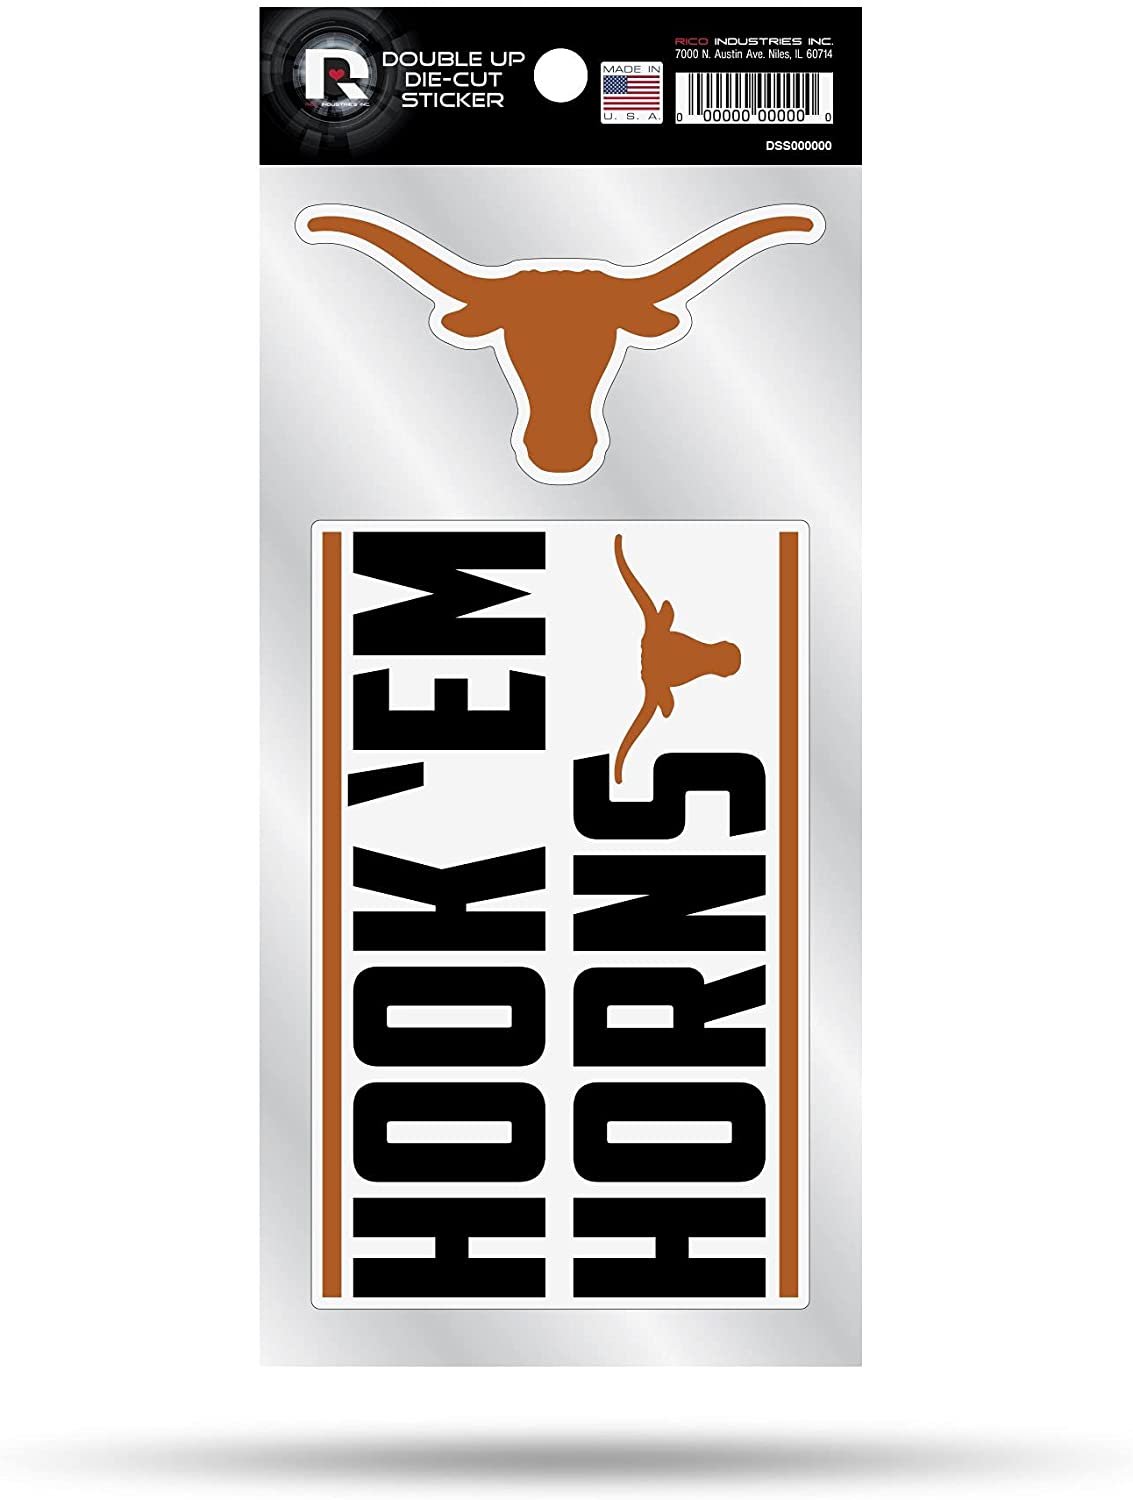 University of Texas Longhorns 2-Piece Double Up Die Cut Sticker Decal Sheet, 4x8 Inch